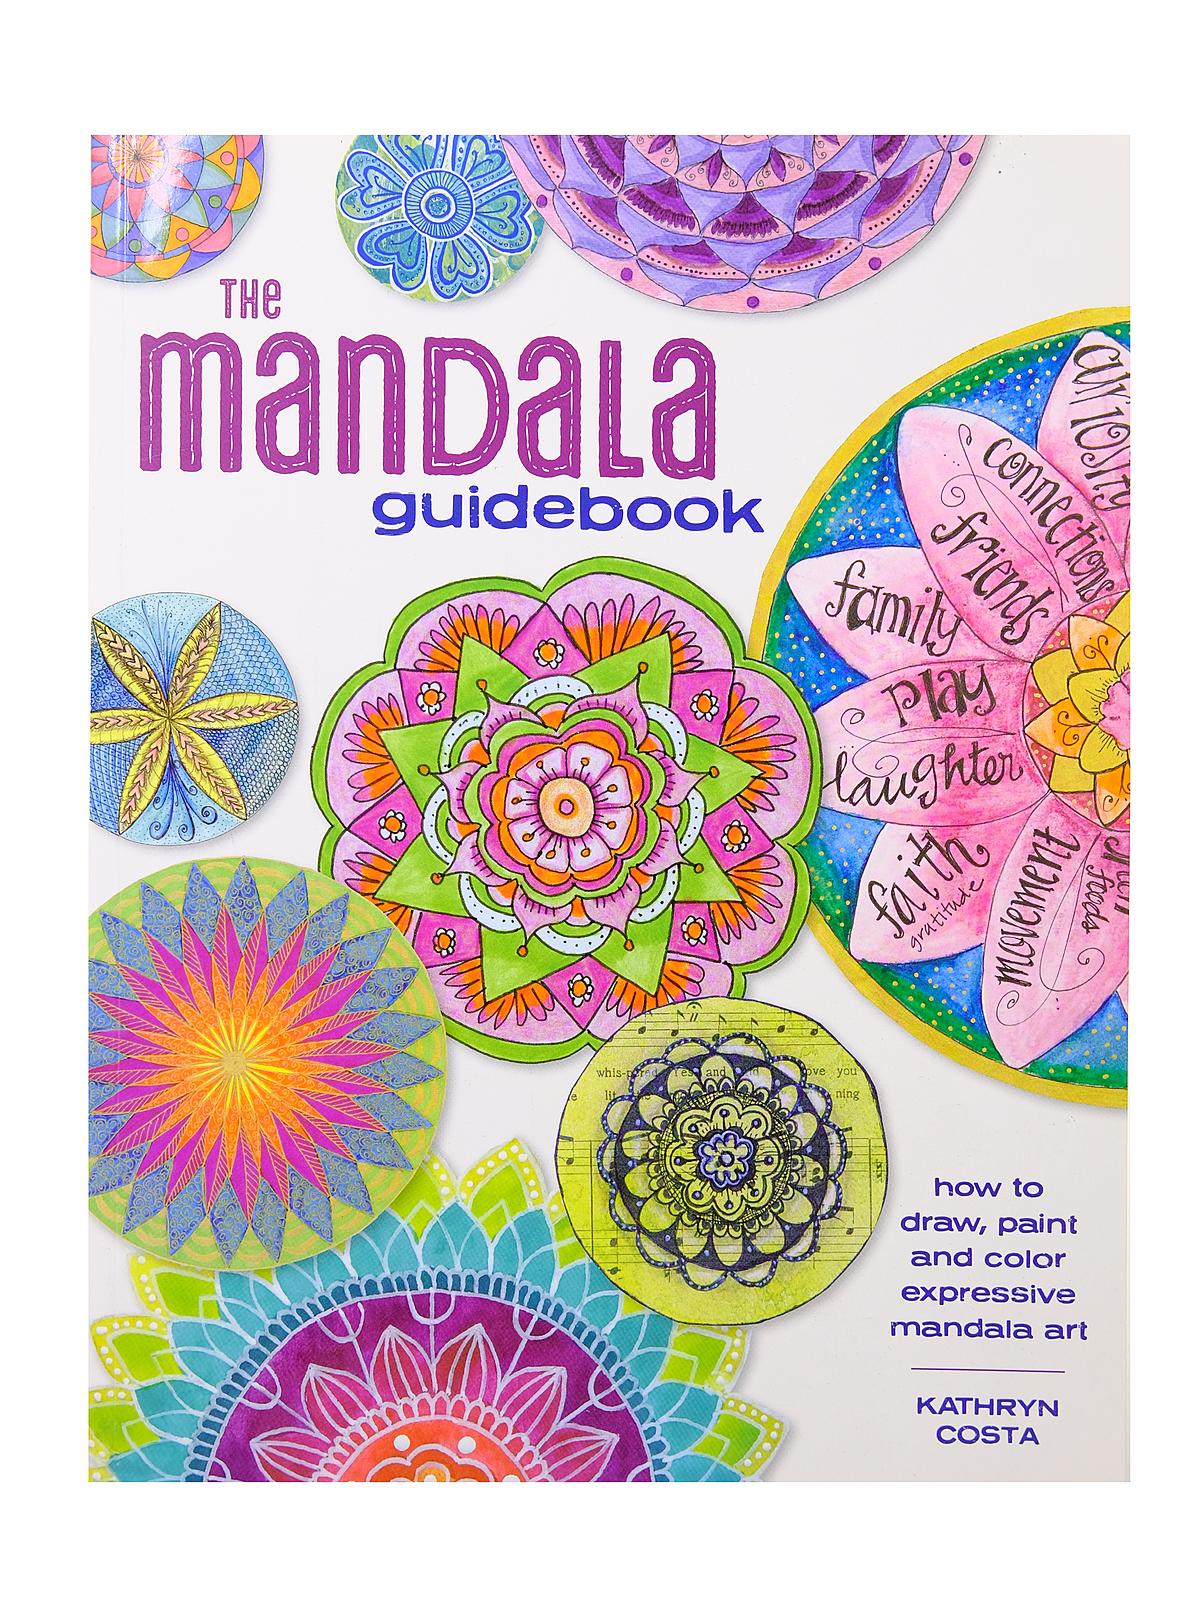 The Mandala Guidebook Each